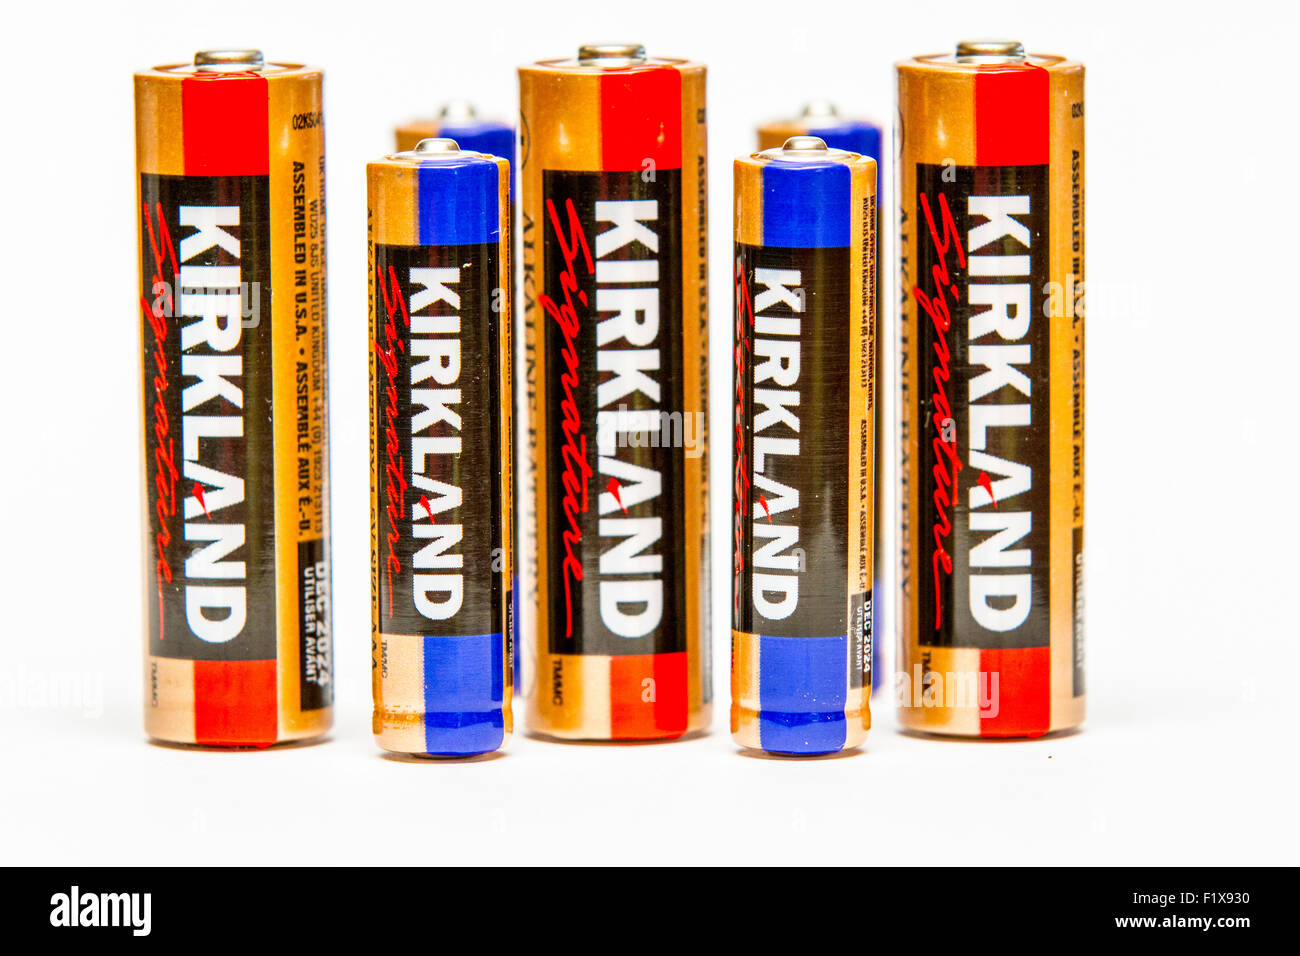 Costco's brand of Kirkland Batteries Stock Photo - Alamy